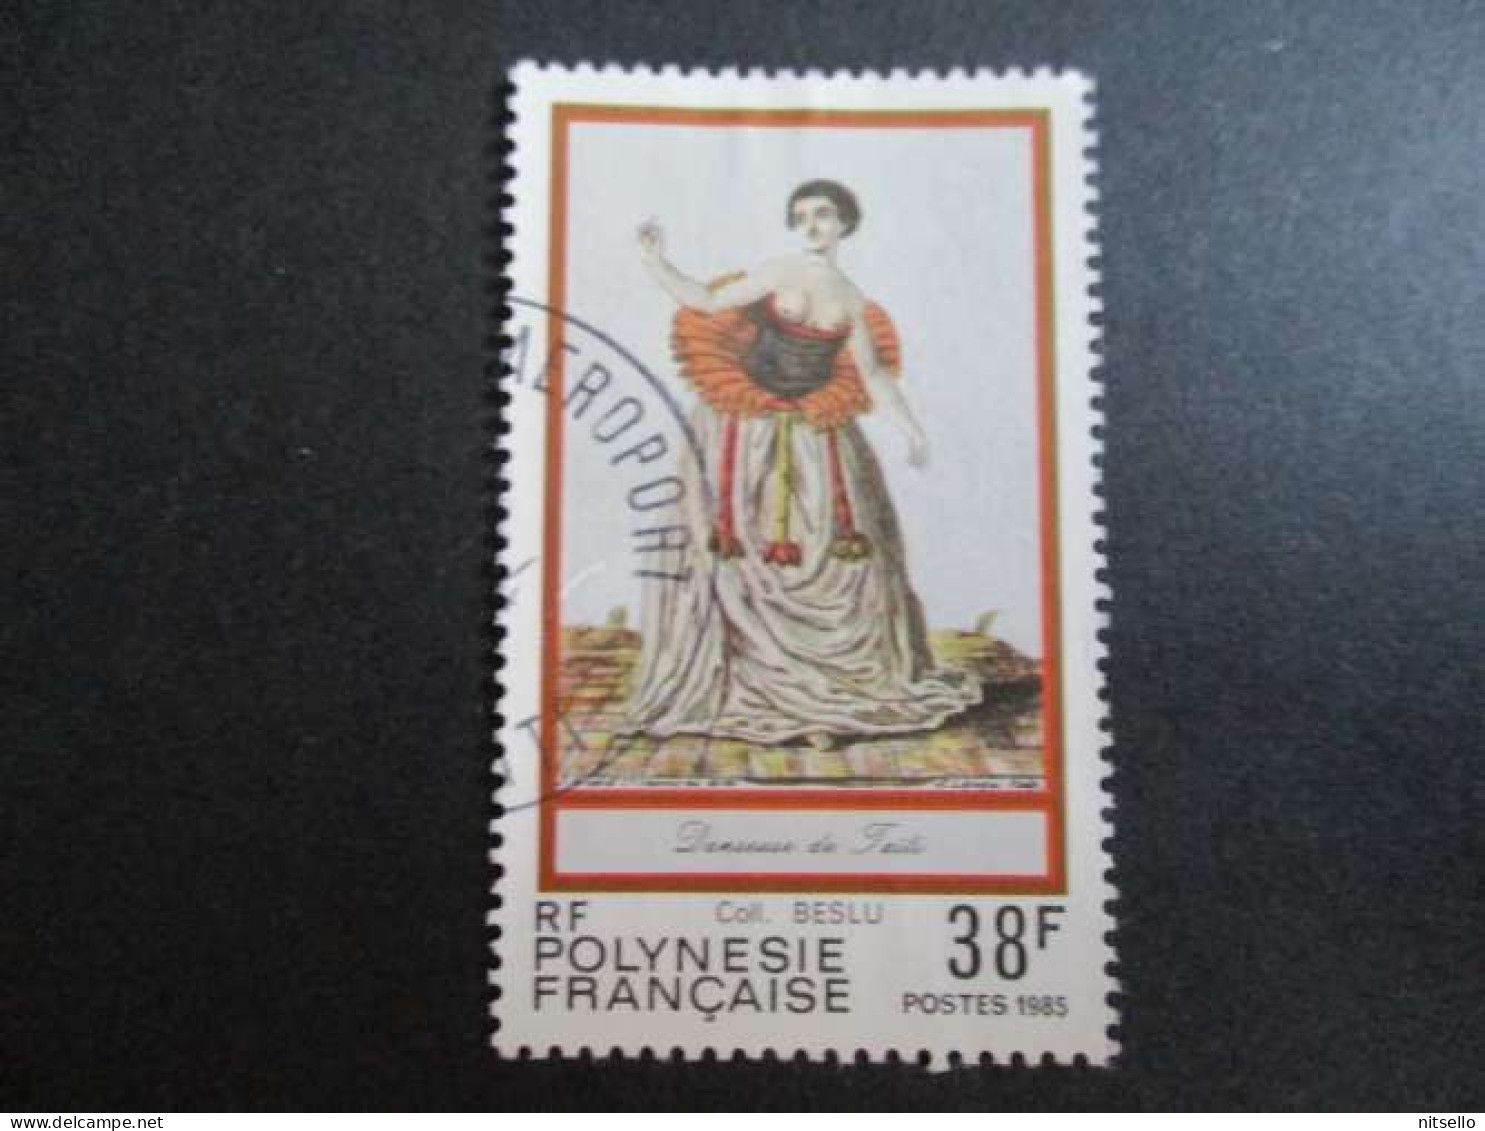 LOTE 2202A ///  (C020)  POLINESIA FRANCESA  - YVERT Nº:  238 OBL 1985 ¡¡¡ OFERTA - LIQUIDATION - JE LIQUIDE !!! - Used Stamps